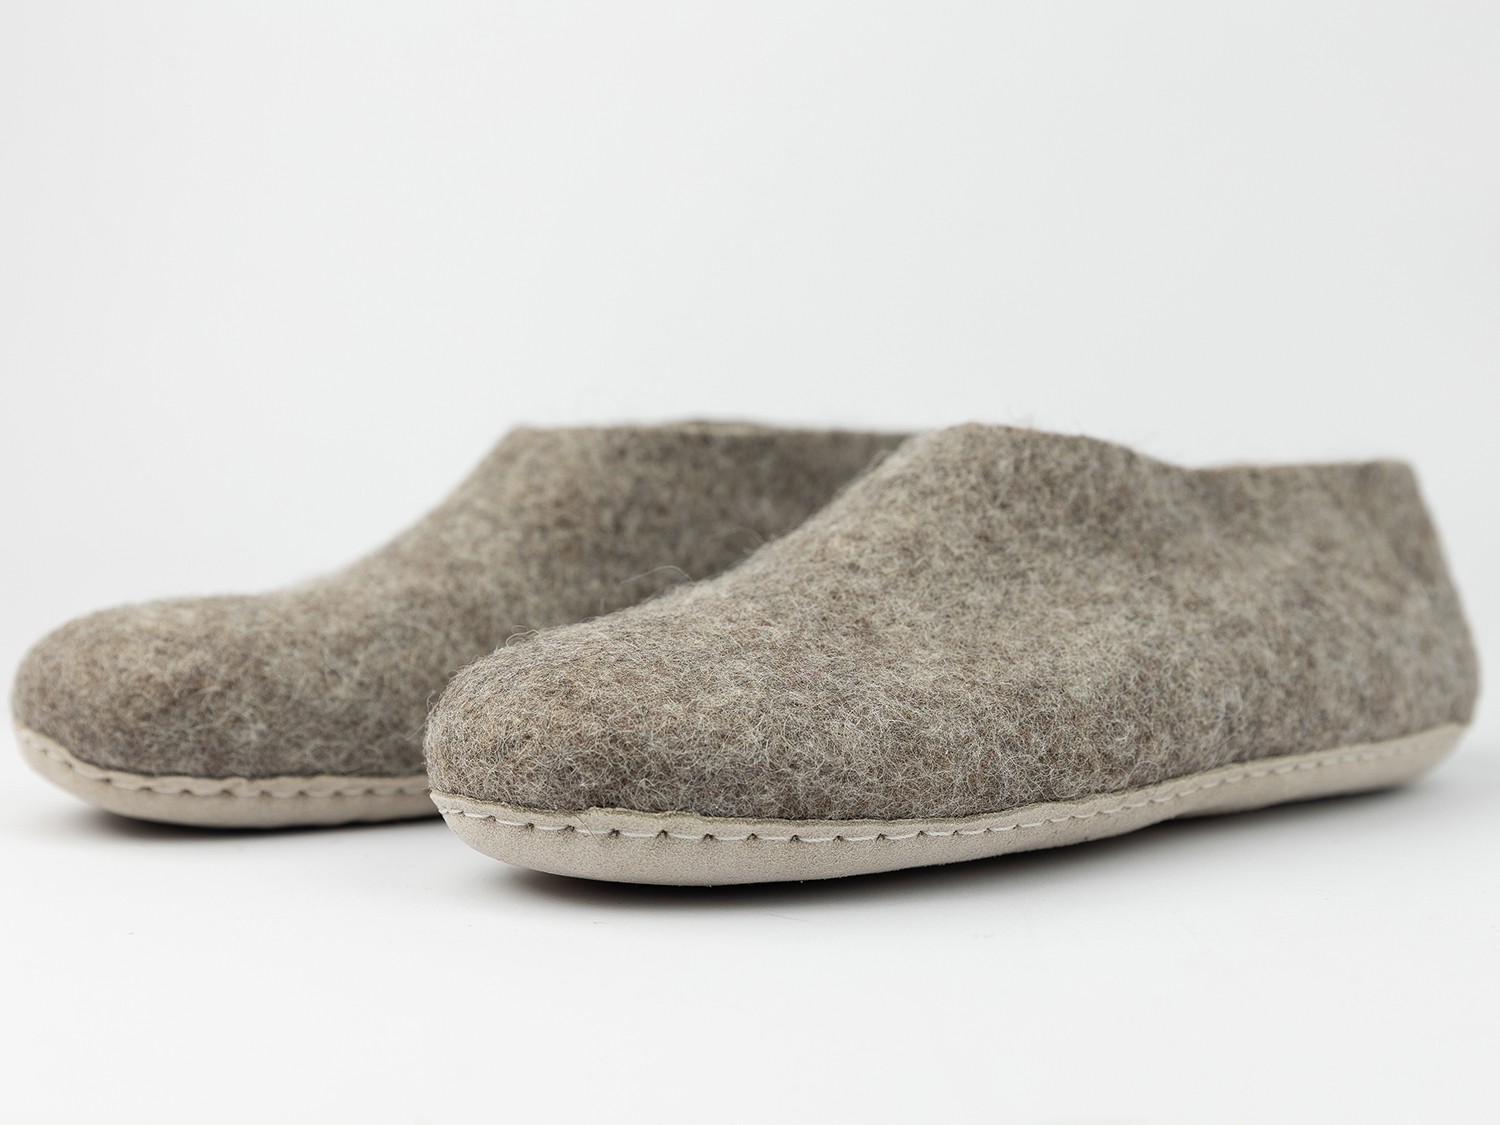 Marbled Grey Handmade Wool Felt Ankle Boot